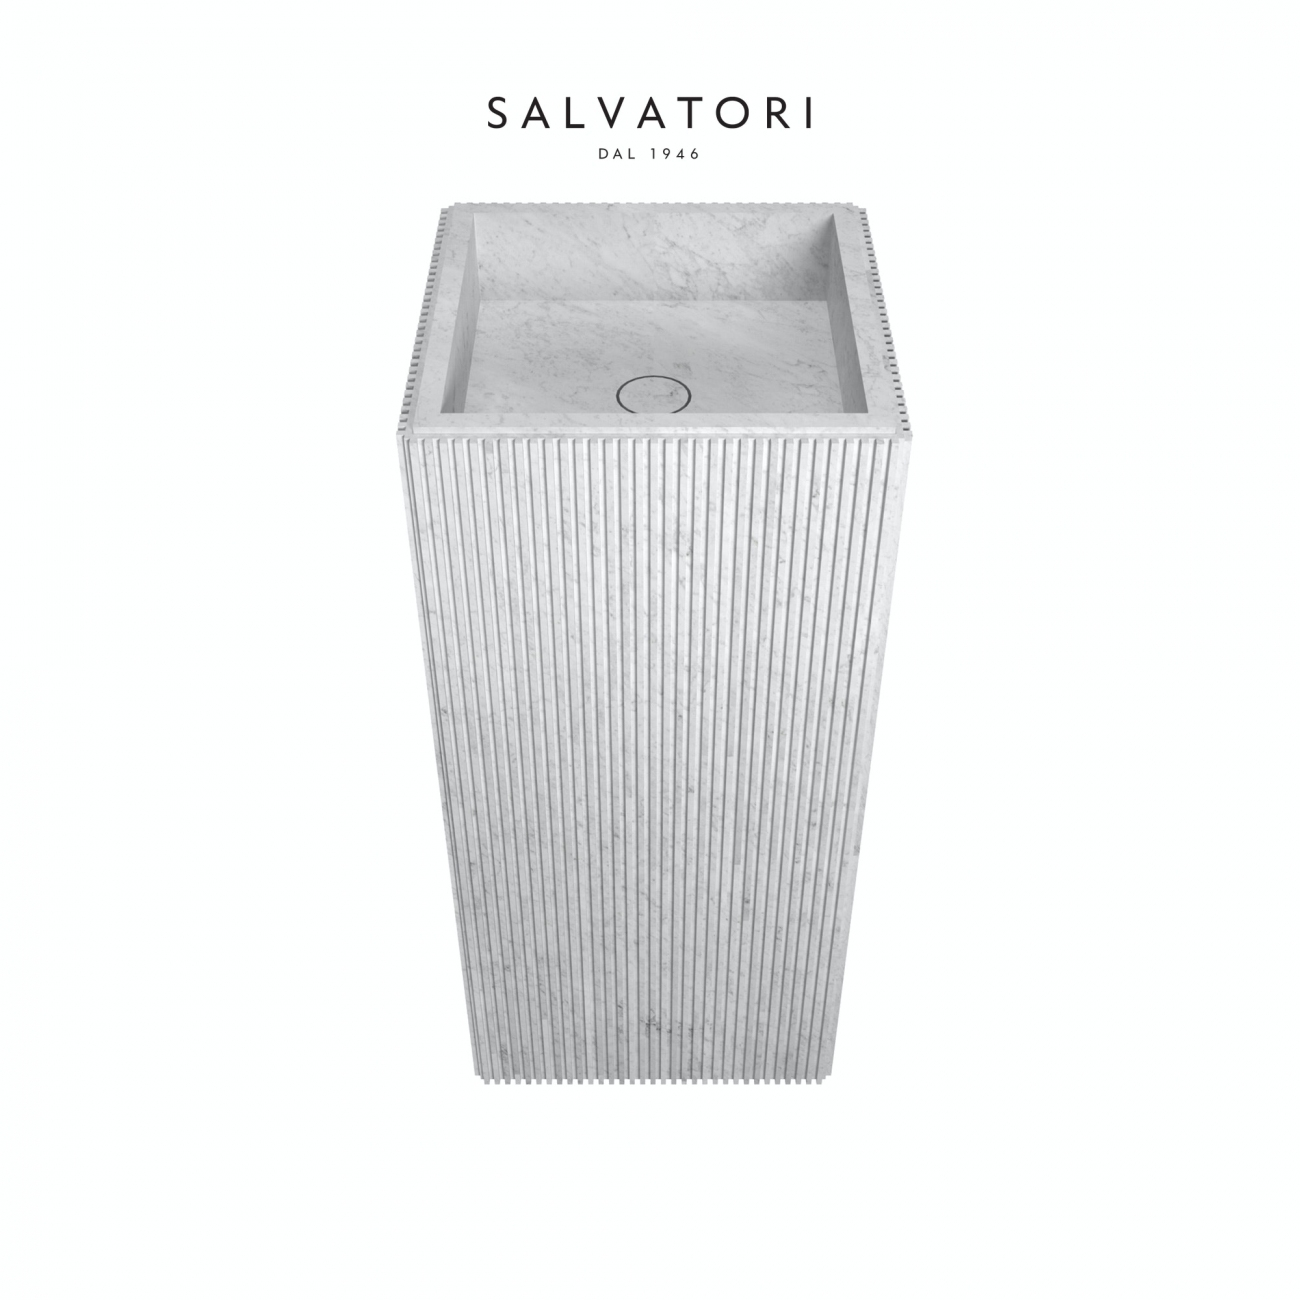 Salvatori Adda Lavabo Freestanding Pietra 41X41